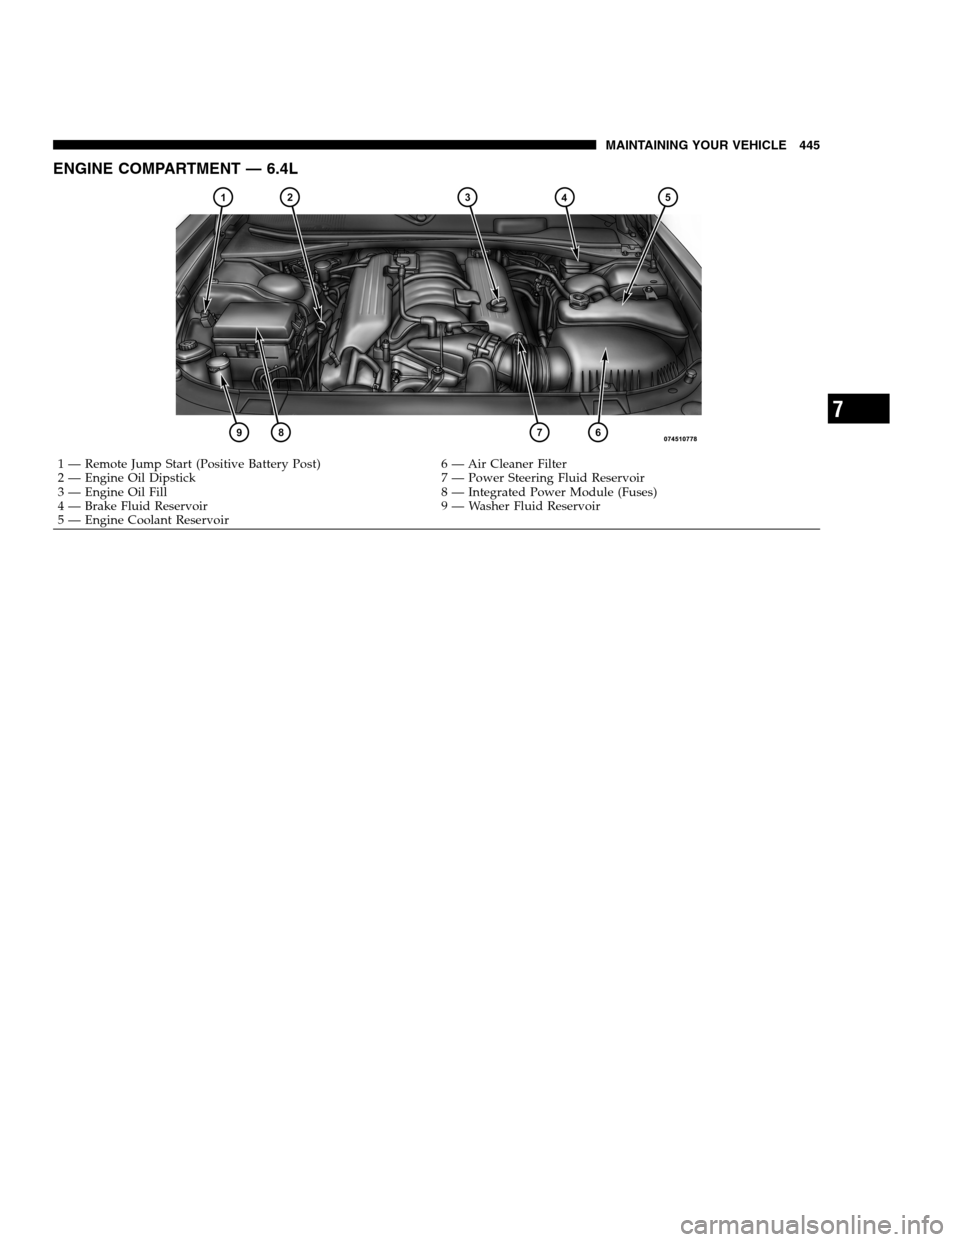 DODGE CHARGER SRT 2012 7.G Owners Manual ENGINE COMPARTMENT — 6.4L
1 — Remote Jump Start (Positive Battery Post) 6 — Air Cleaner Filter
2 — Engine Oil Dipstick 7 — Power Steering Fluid Reservoir
3 — Engine Oil Fill 8 — Integrat